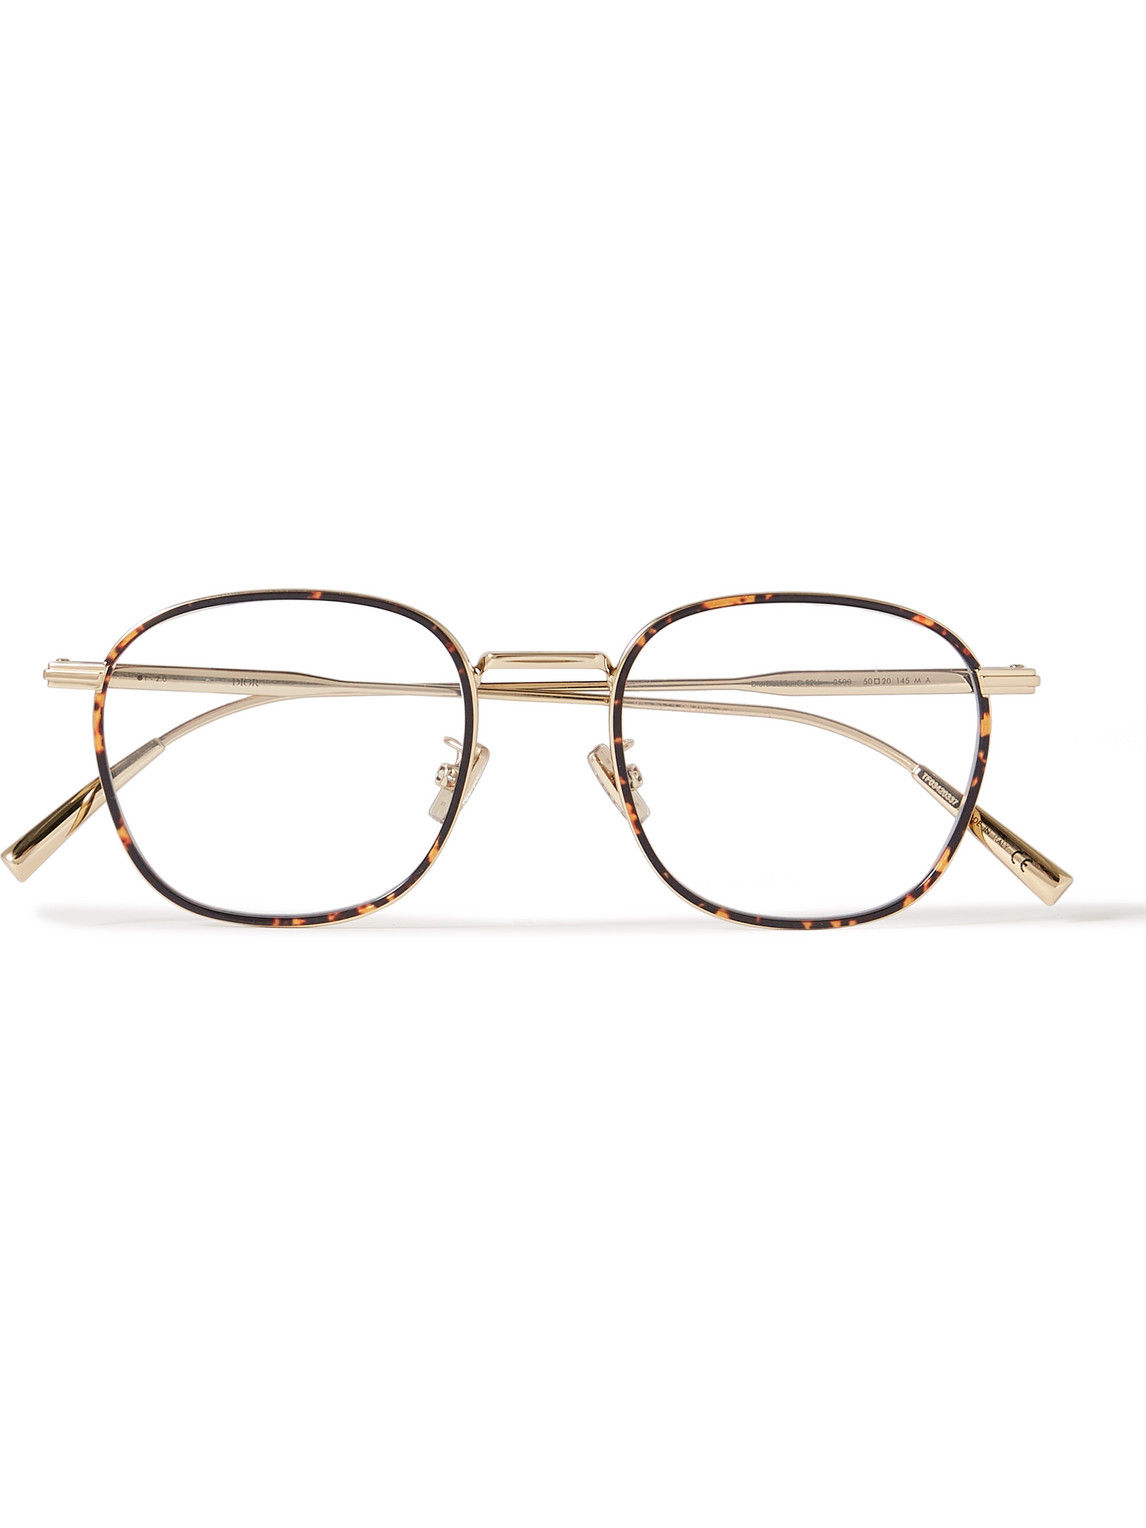 Dior Blacksuit S2u Round-frame Tortoiseshell Acetate And Gold-tone Optical Glasses